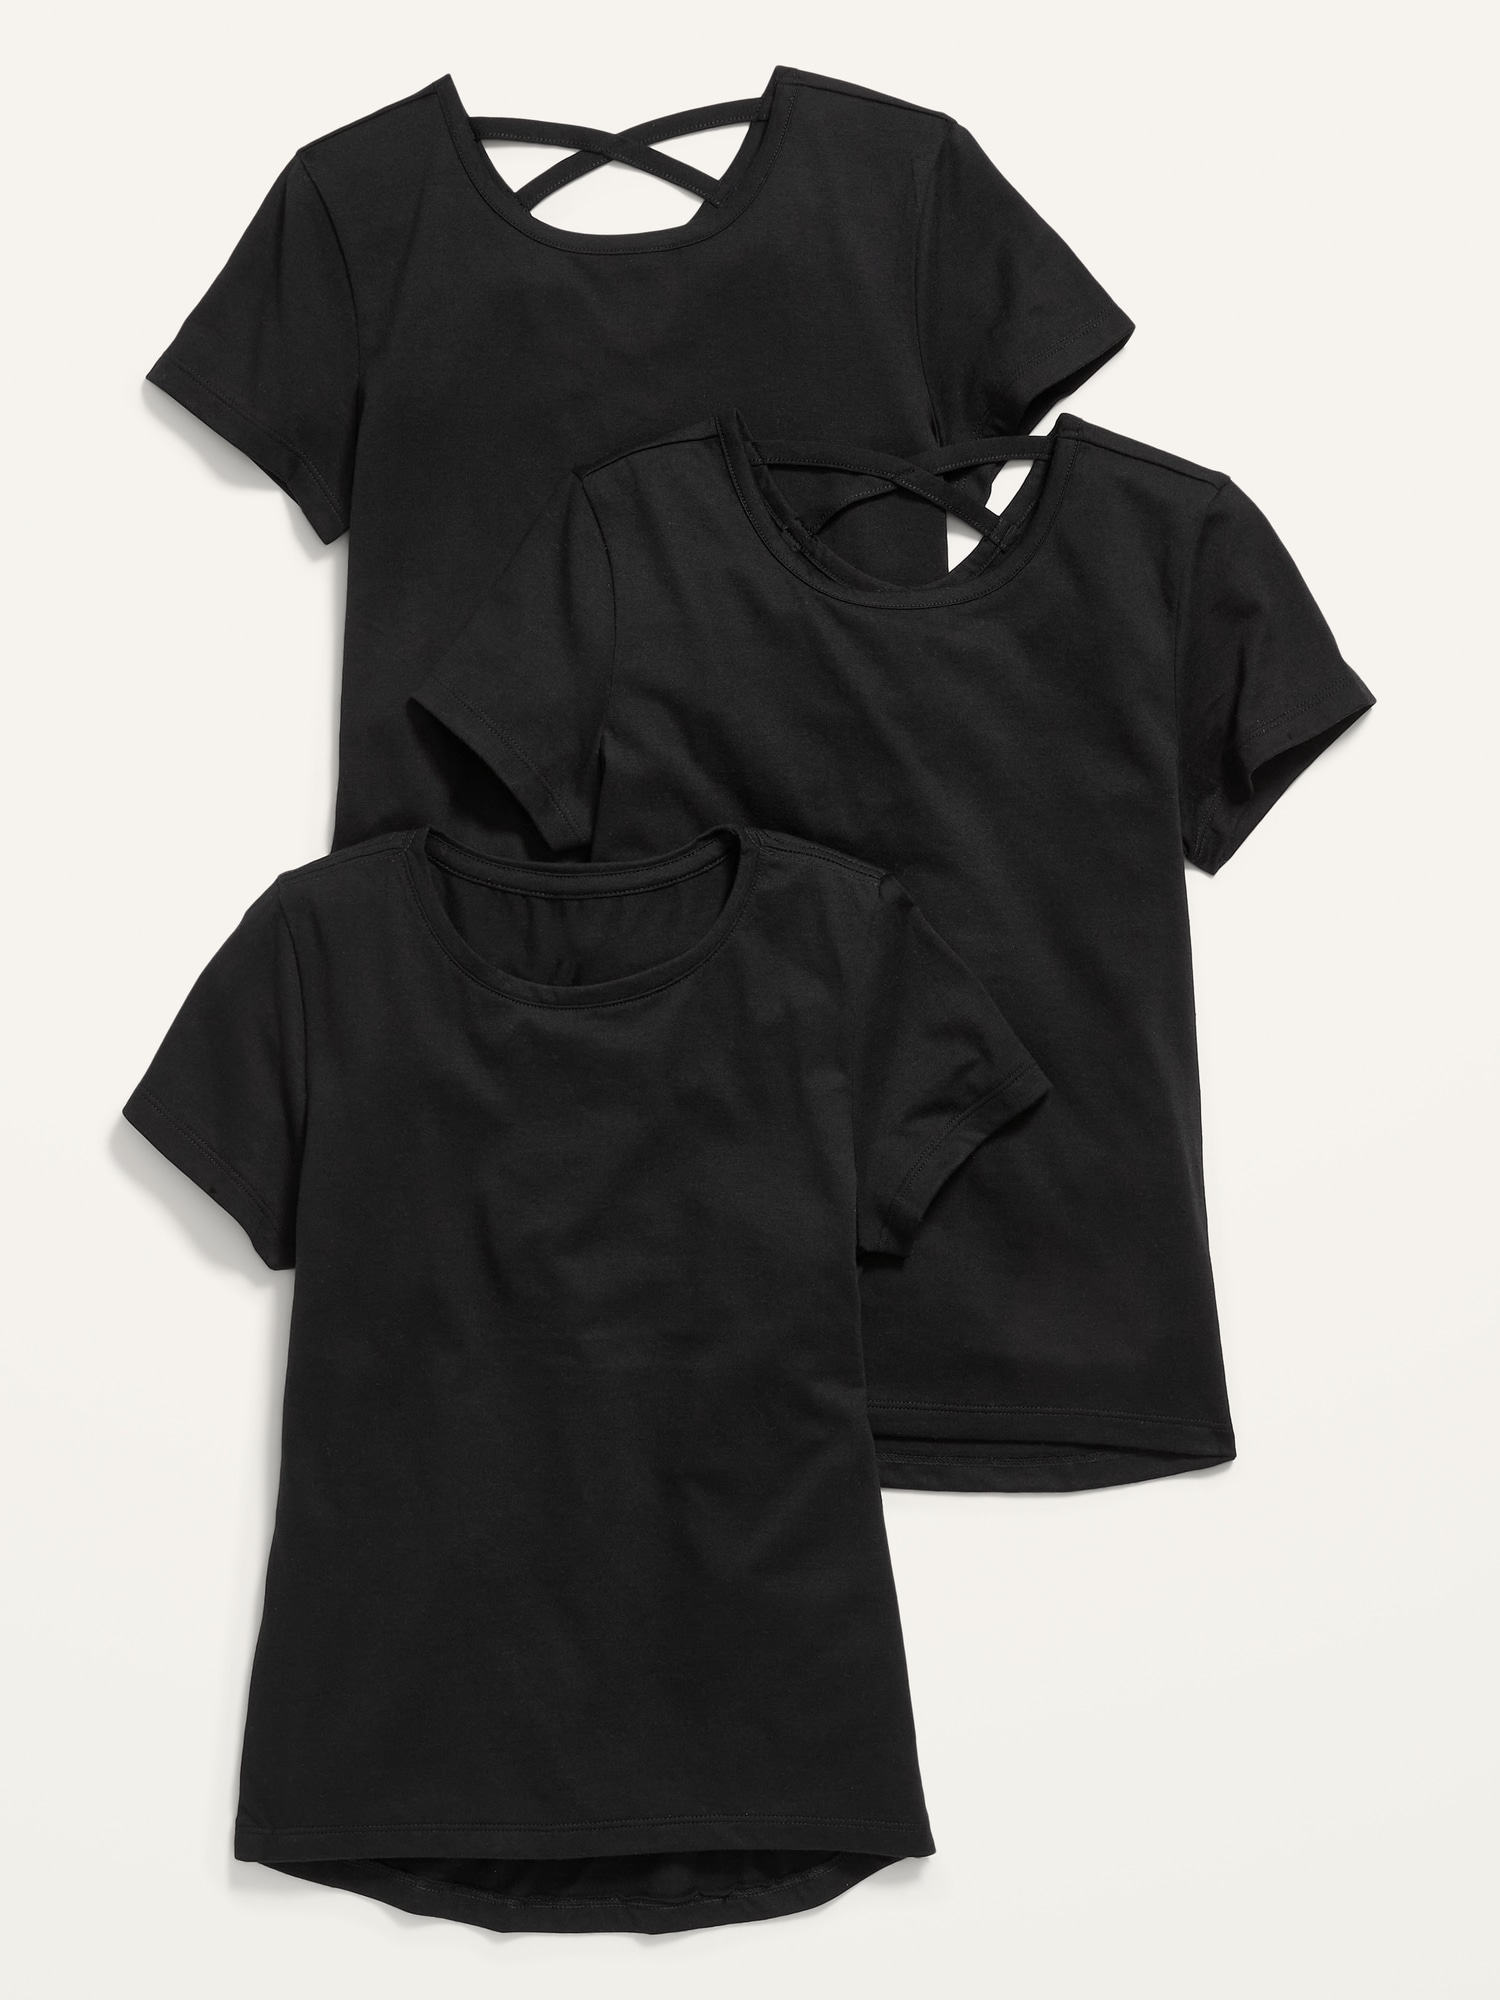 Old Navy Softest Short-Sleeve T-Shirt Variety 3-Pack for Girls black. 1